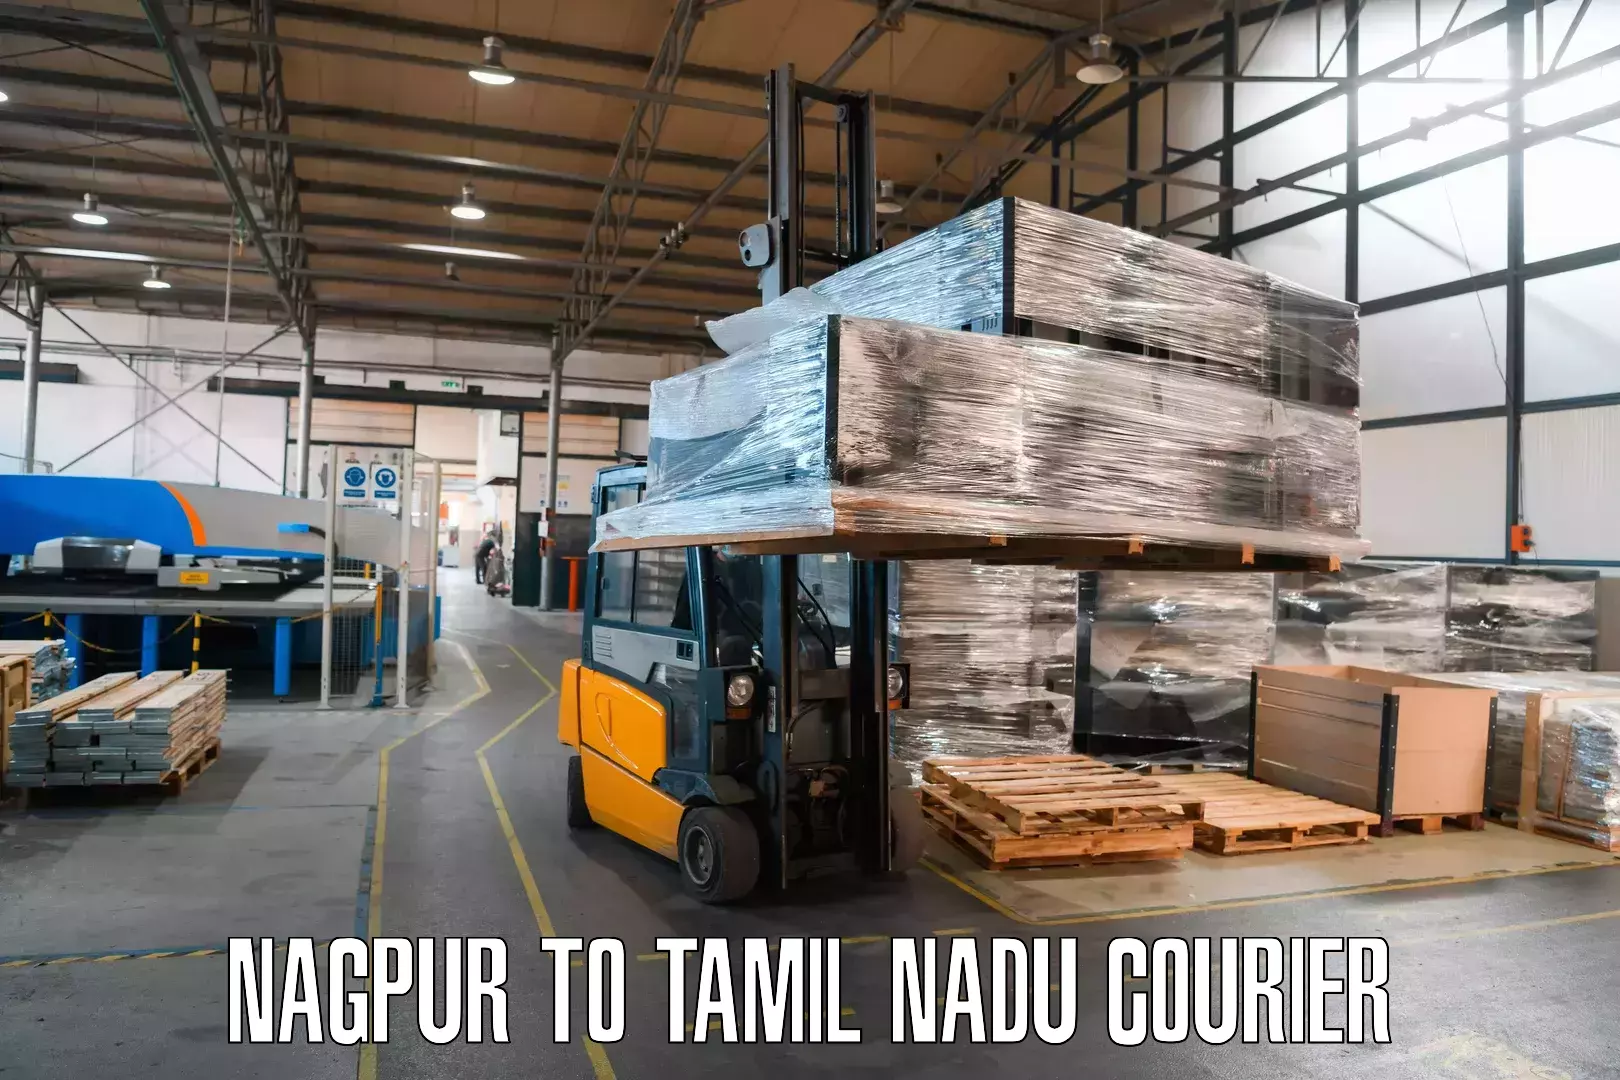 User-friendly delivery service Nagpur to Tamil Nadu